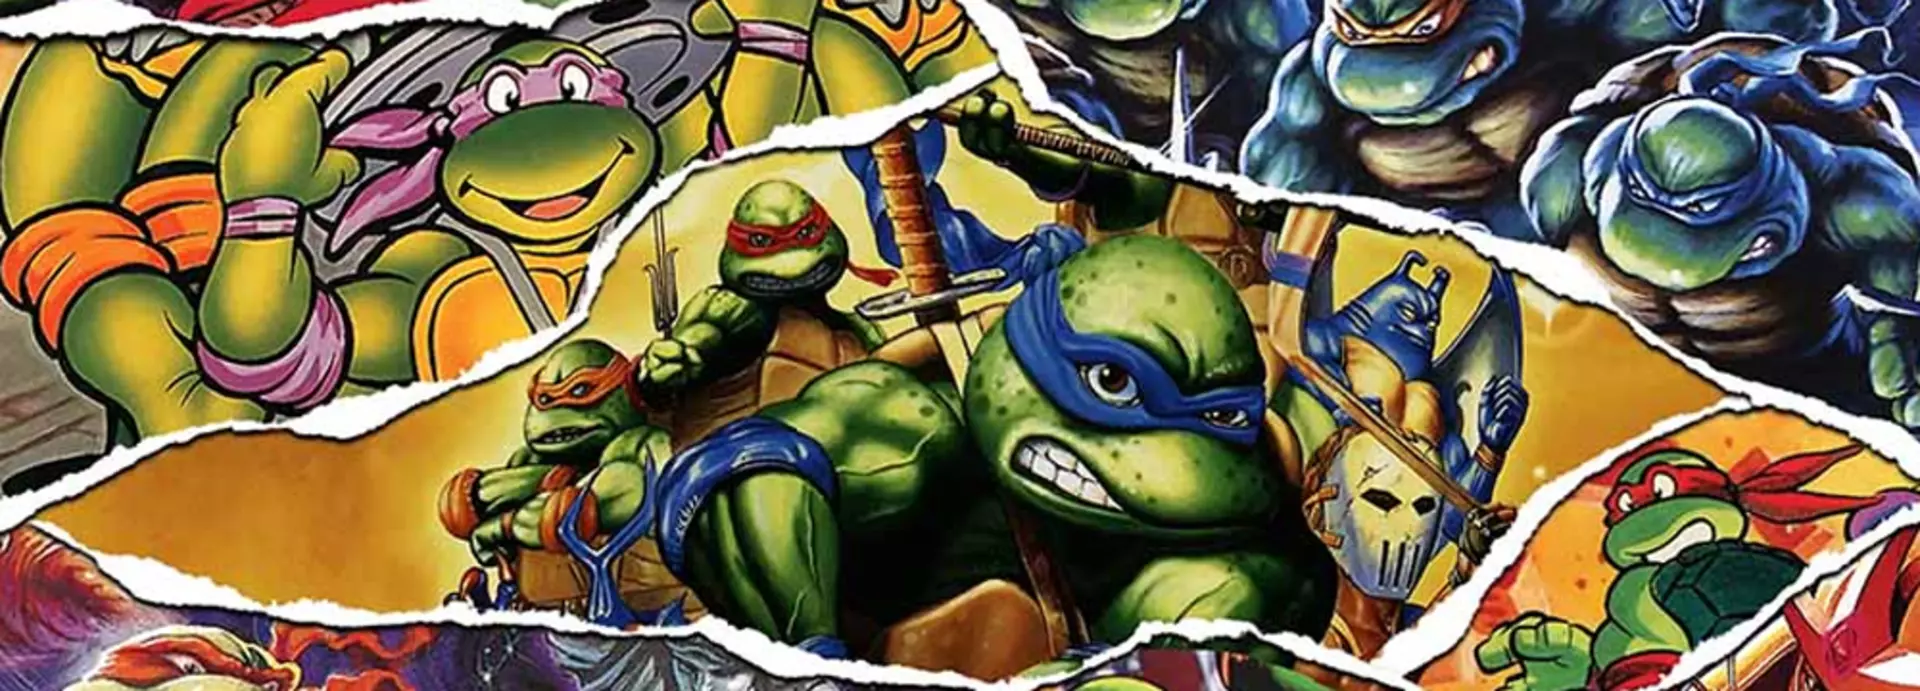 Teenage mutant ninja turtles the cowabunga collection купить steam фото 60